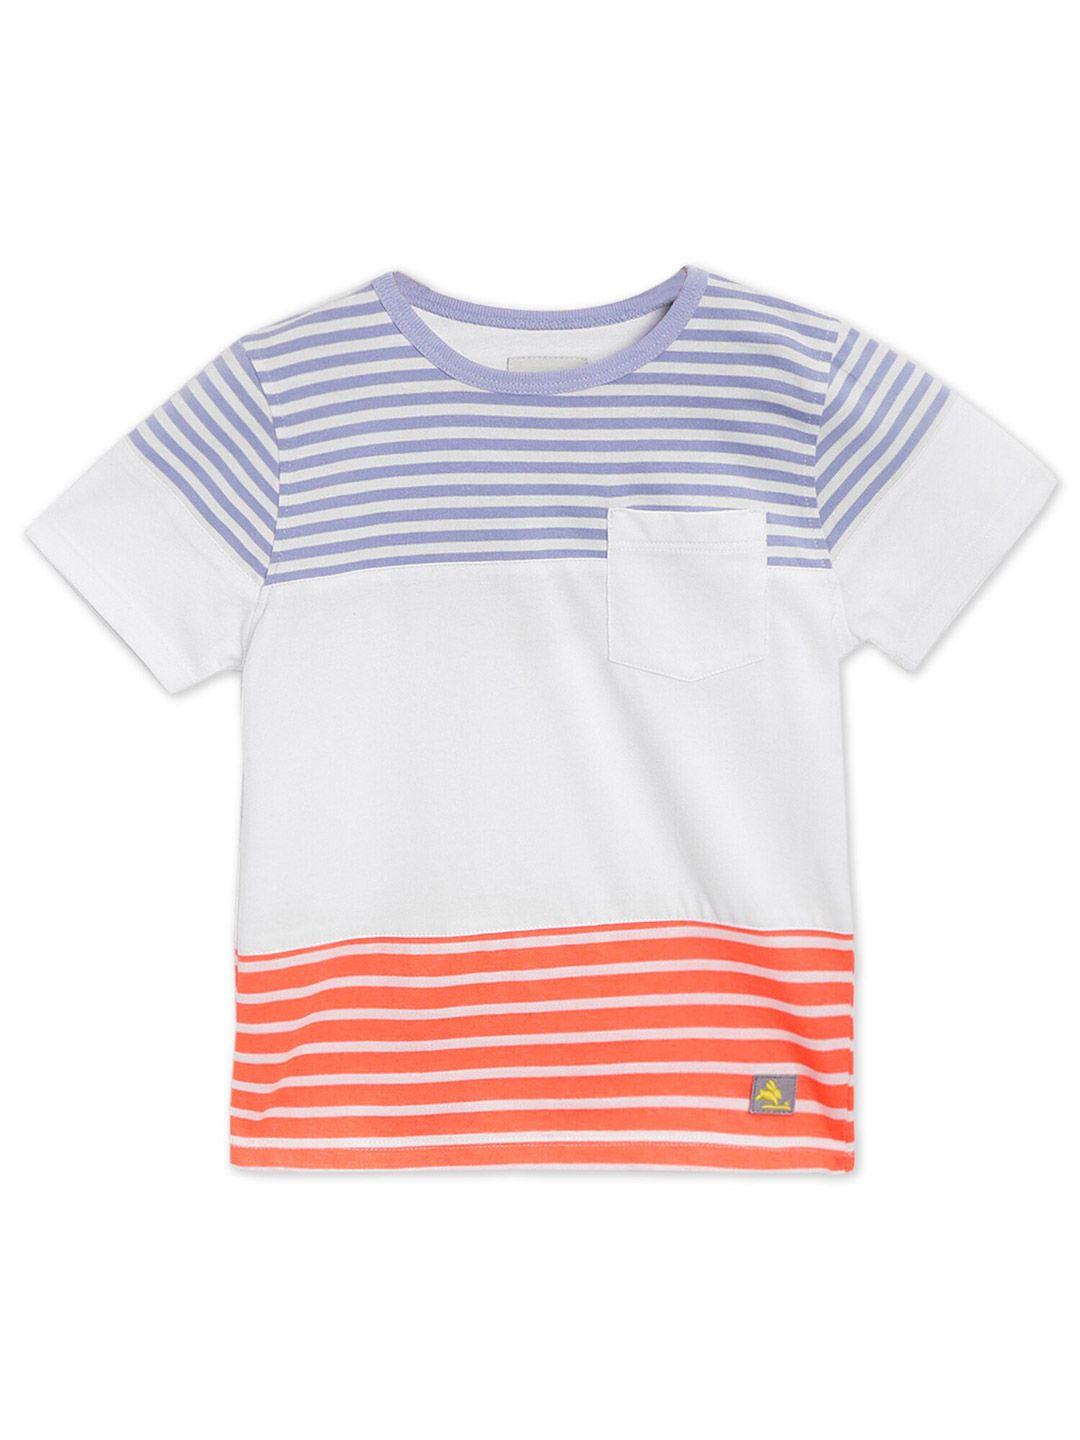 cherry crumble boys white & orange striped cut & sew pique tshirt